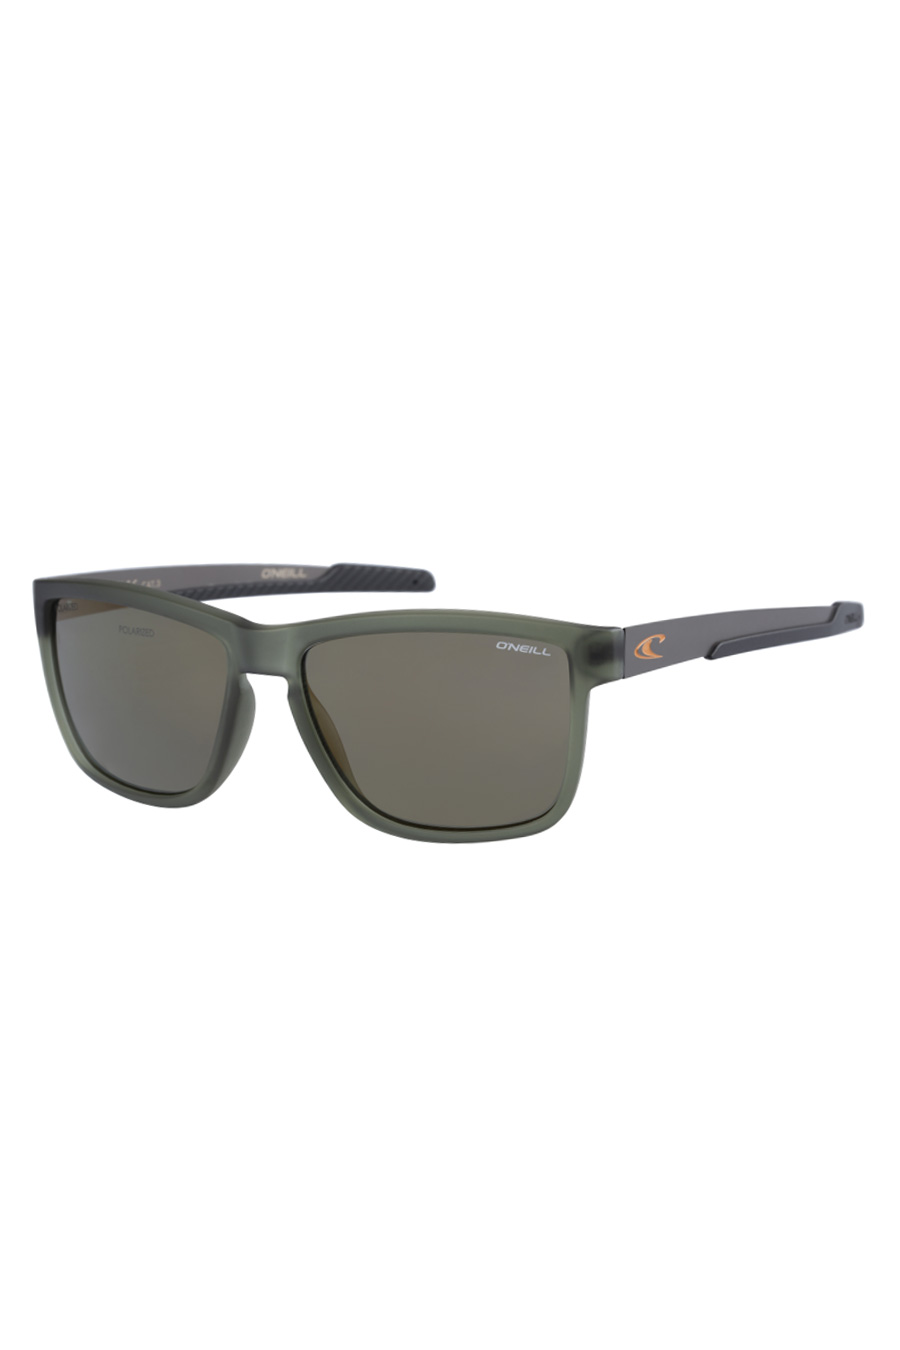 Sunglasses ONEILL ONS-9006-20-109P